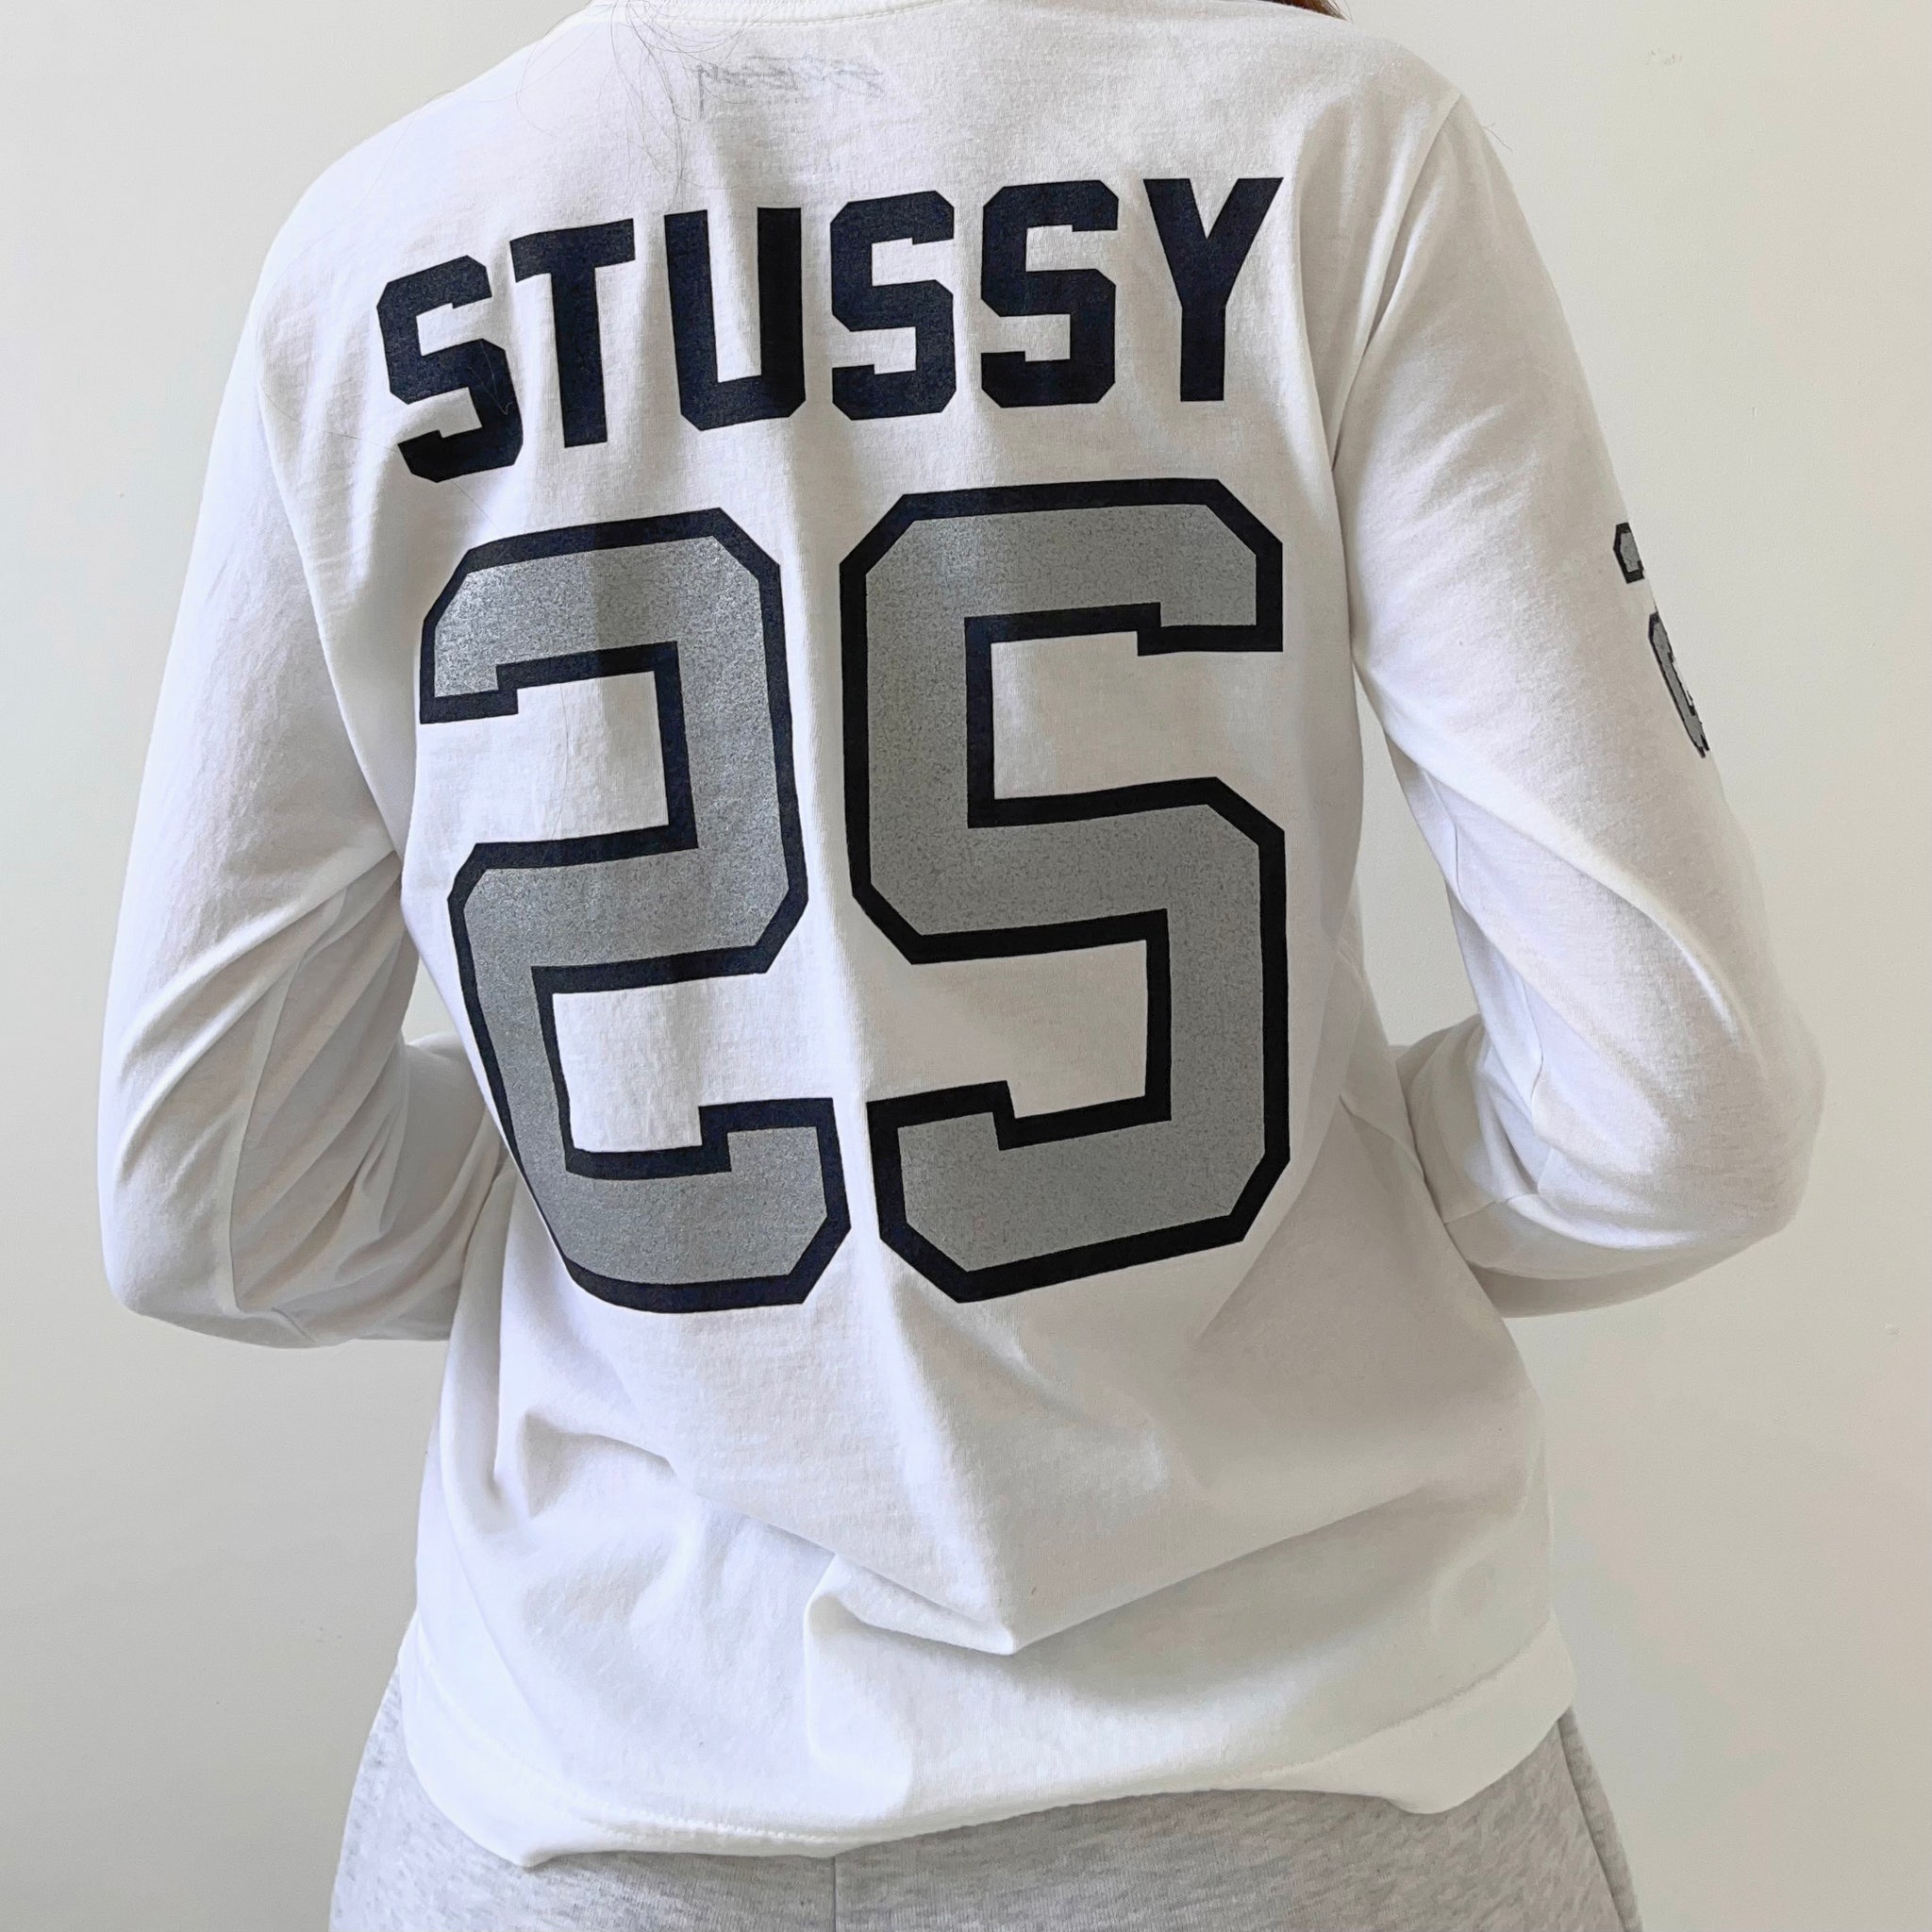 Stussy Top (M)